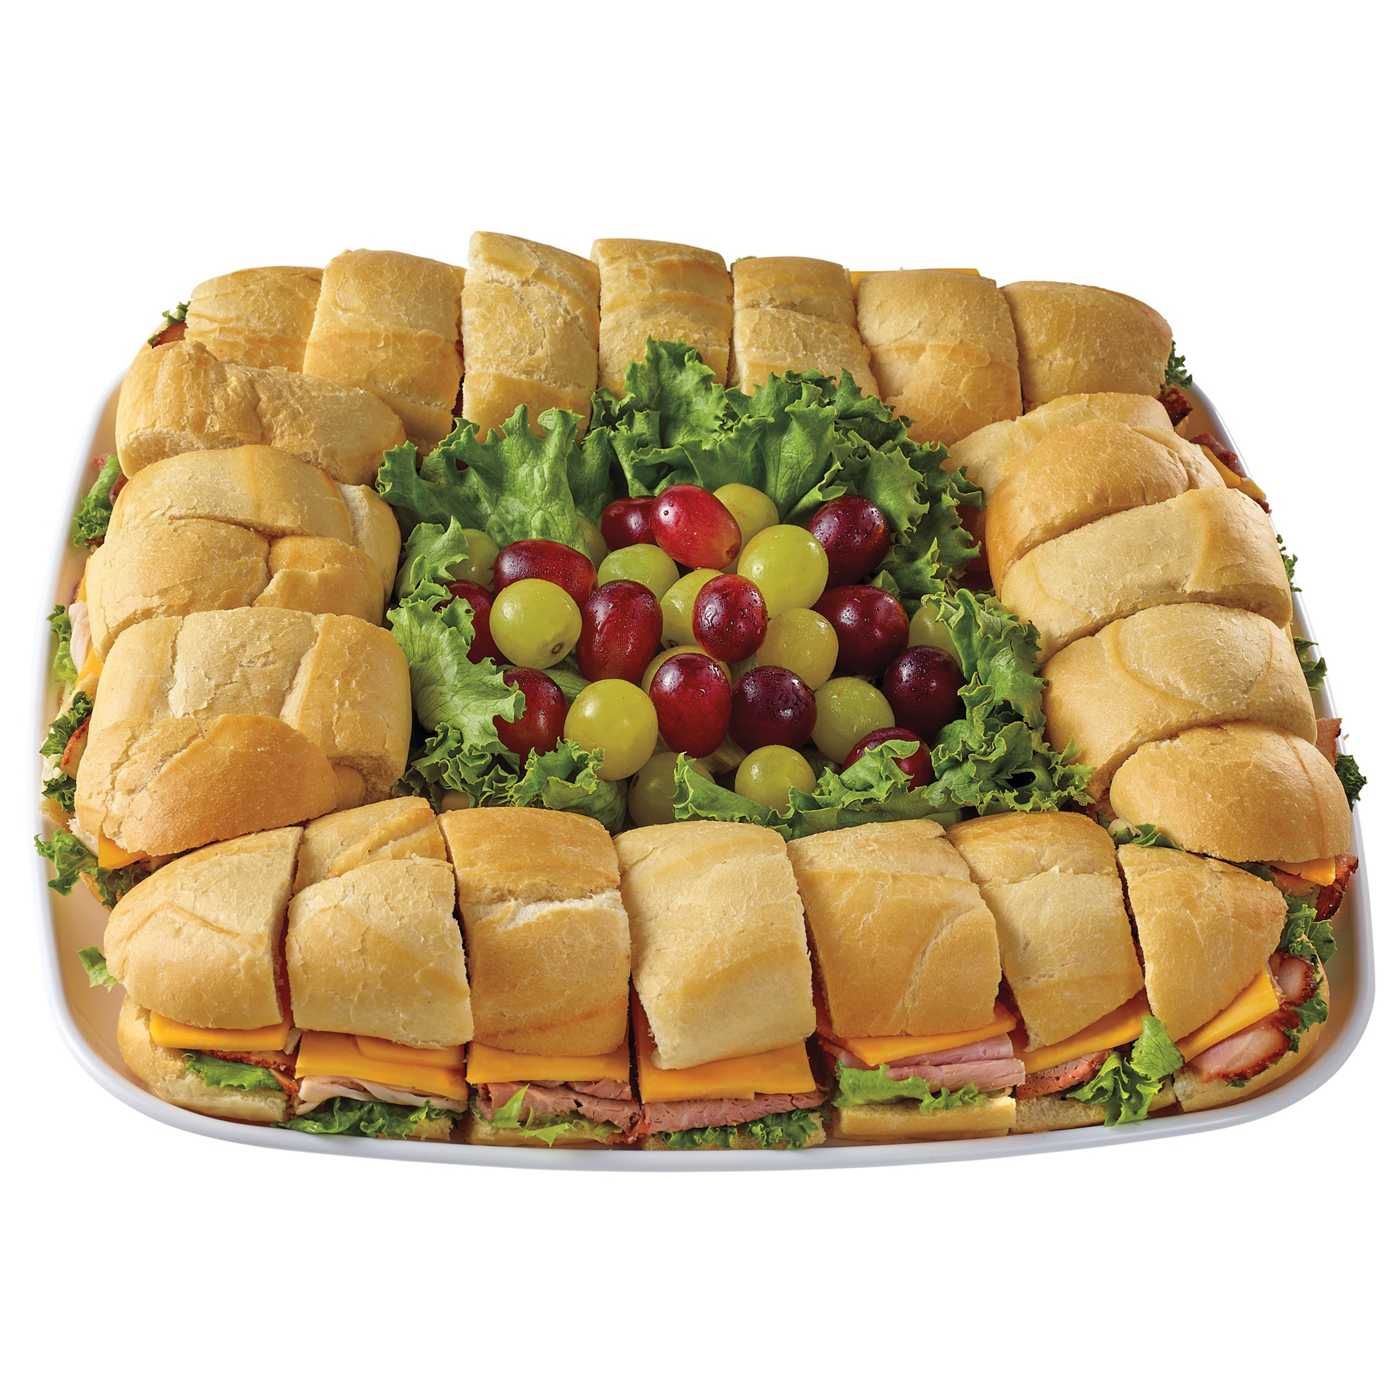 H-E-B Deli Party Tray - Assorted Sub Sandwiches; image 1 of 2